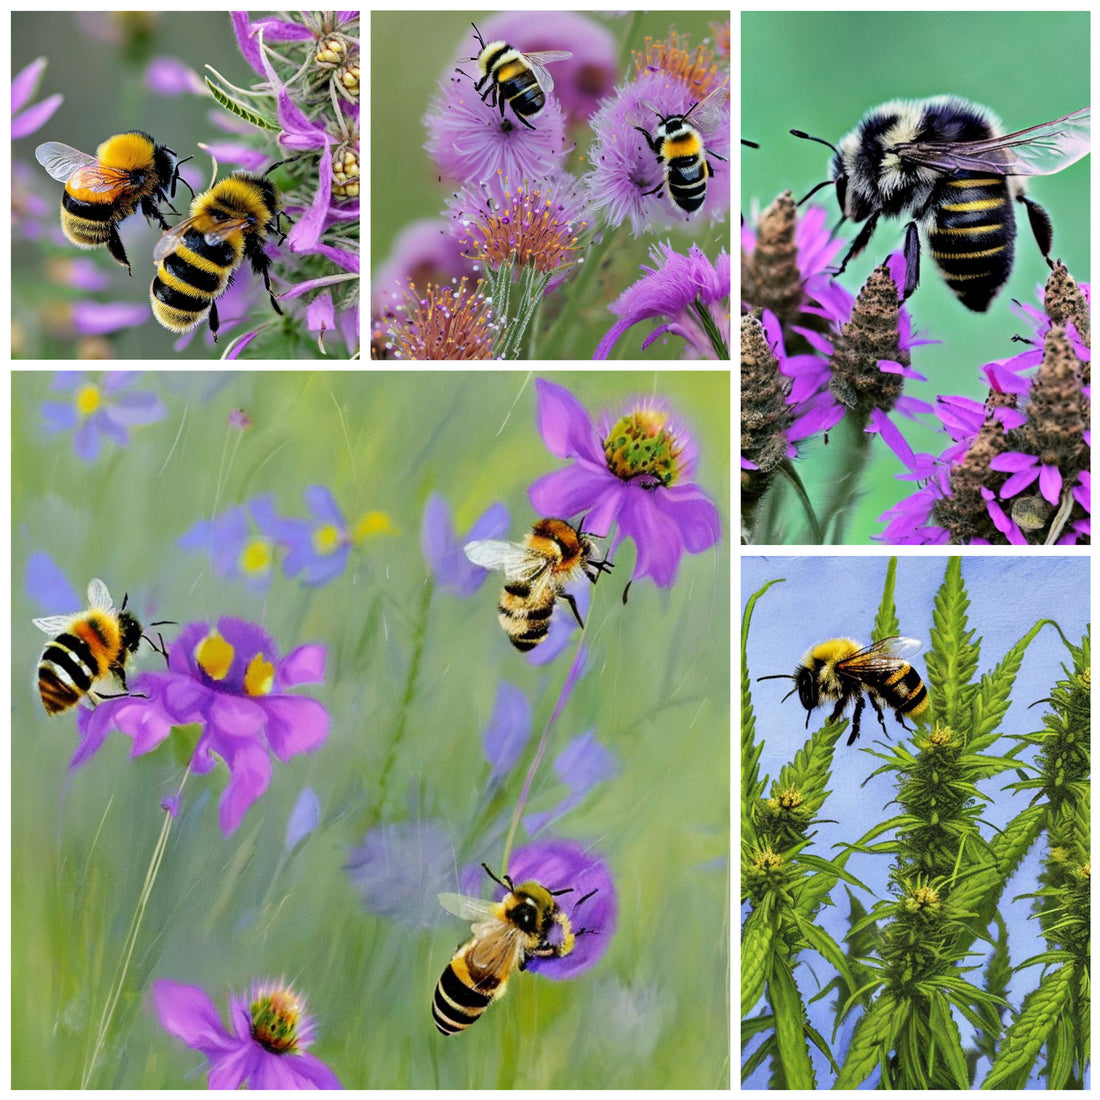 Planting Wild Flower Seeds For Pollinators